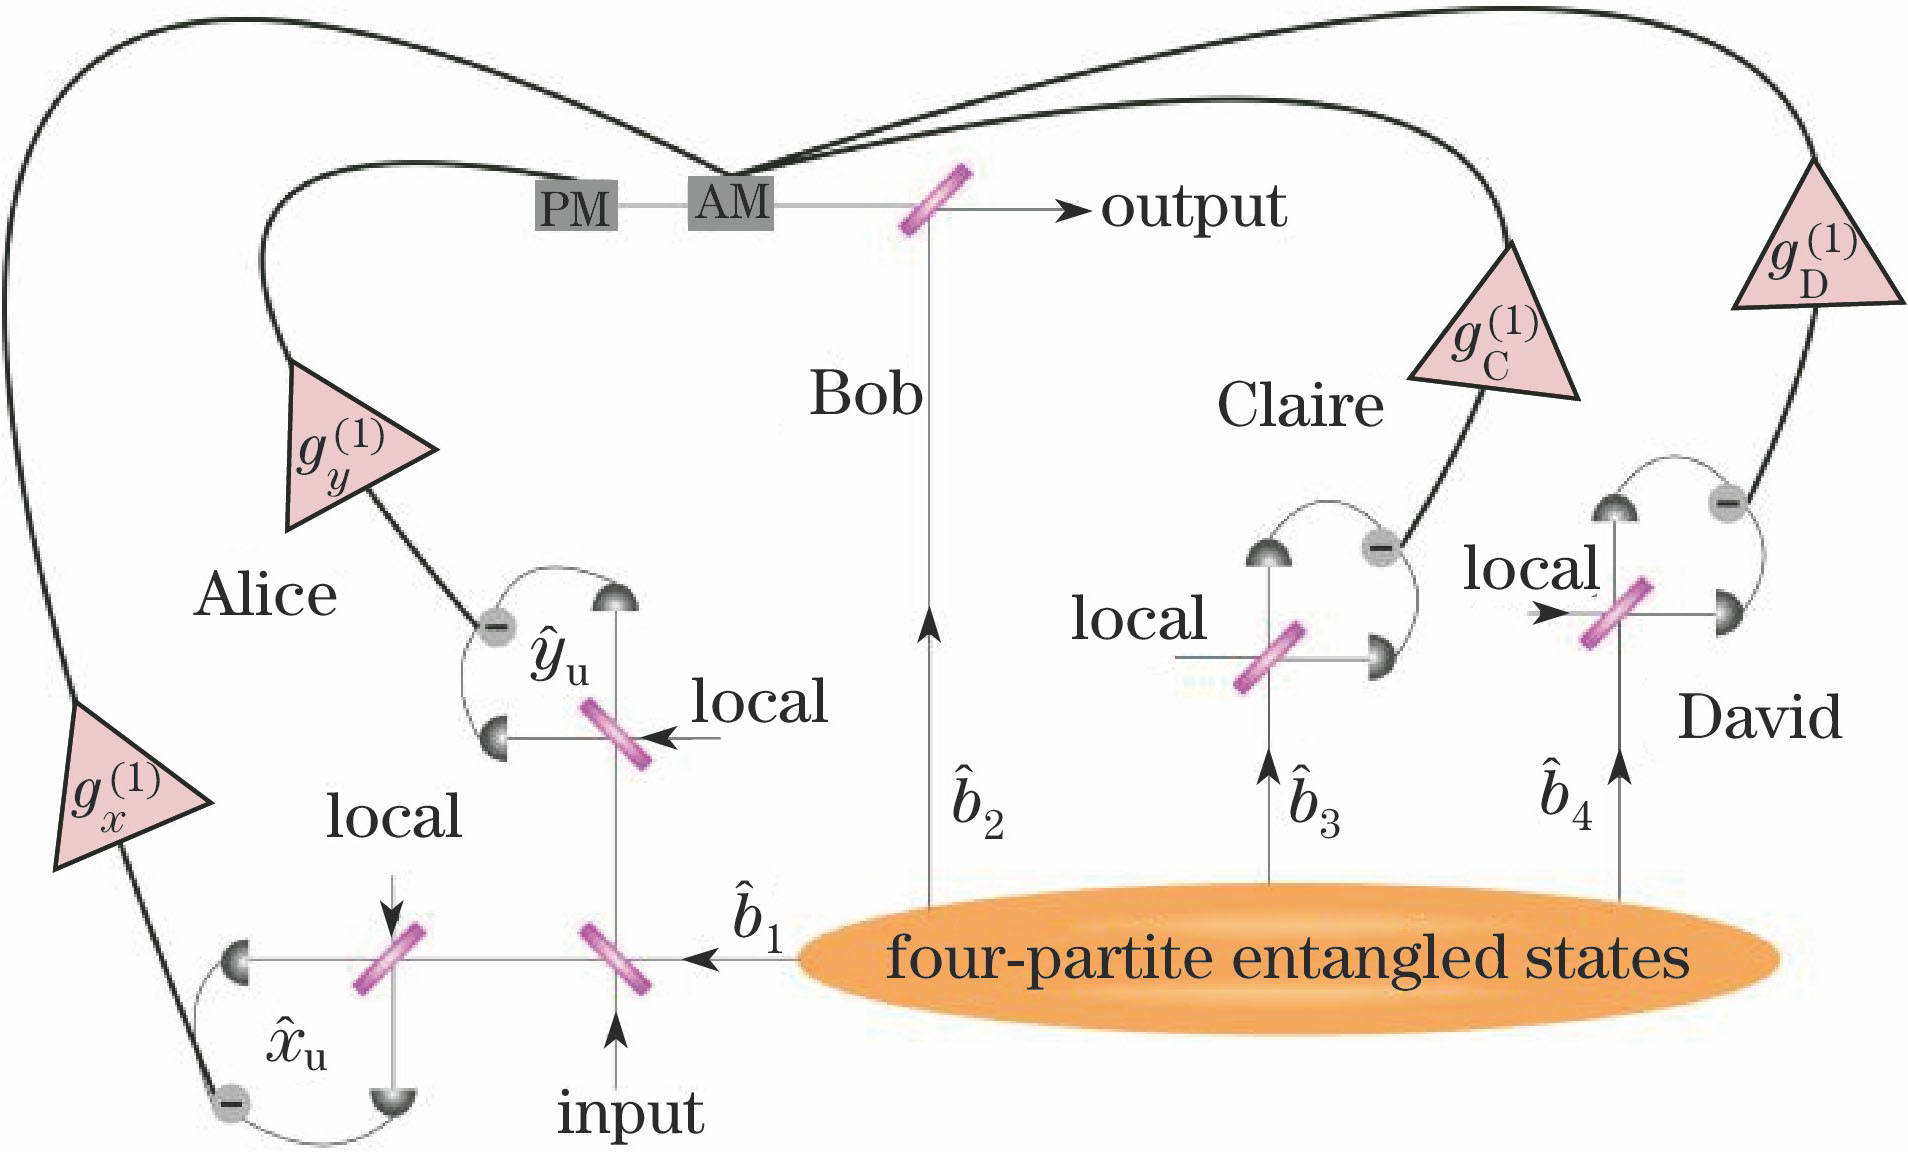 Structural diagram of open-destination quantum teleportation network for quantum state transferred to Bob